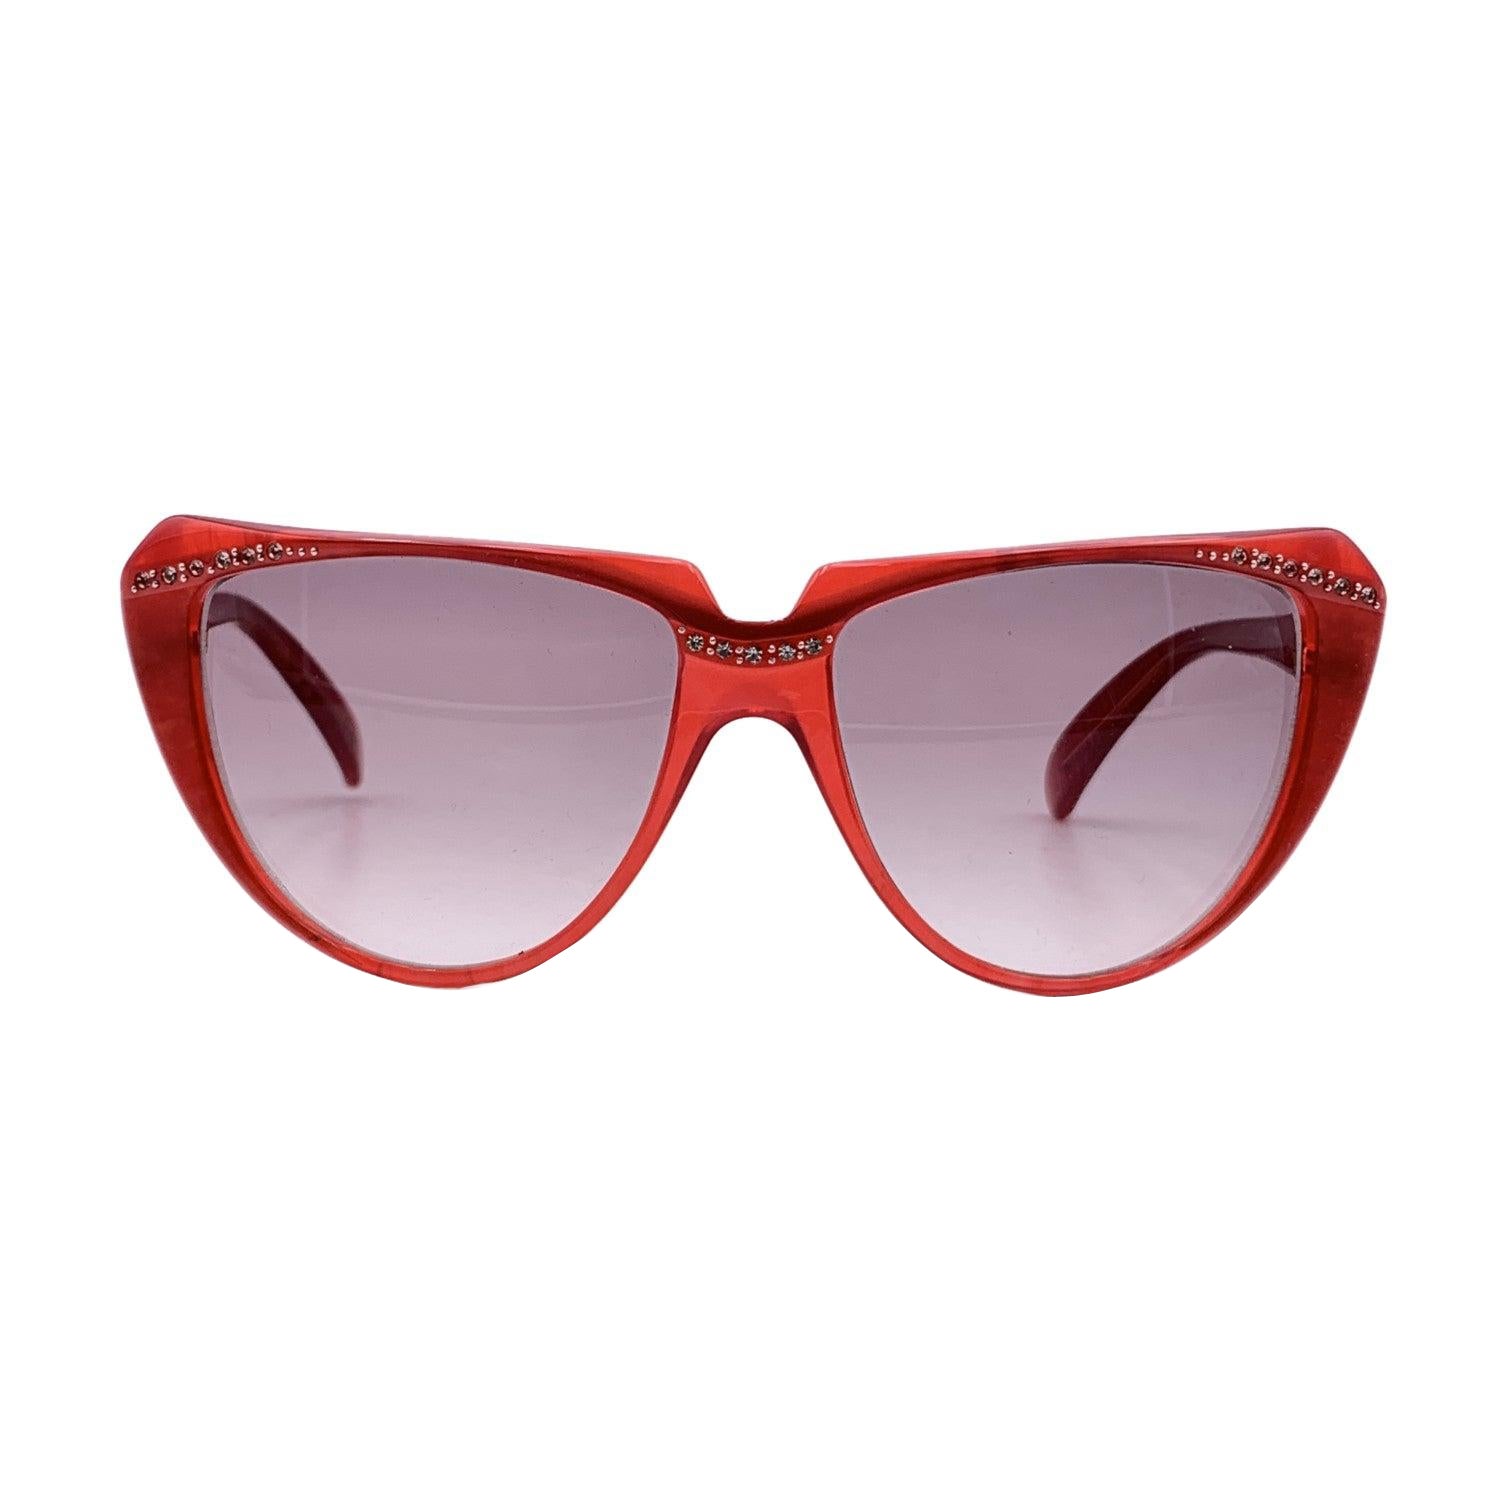 Yves Saint Laurent Vintage Cat Eye Sunglasses 8704 P 74 55/14 130mm